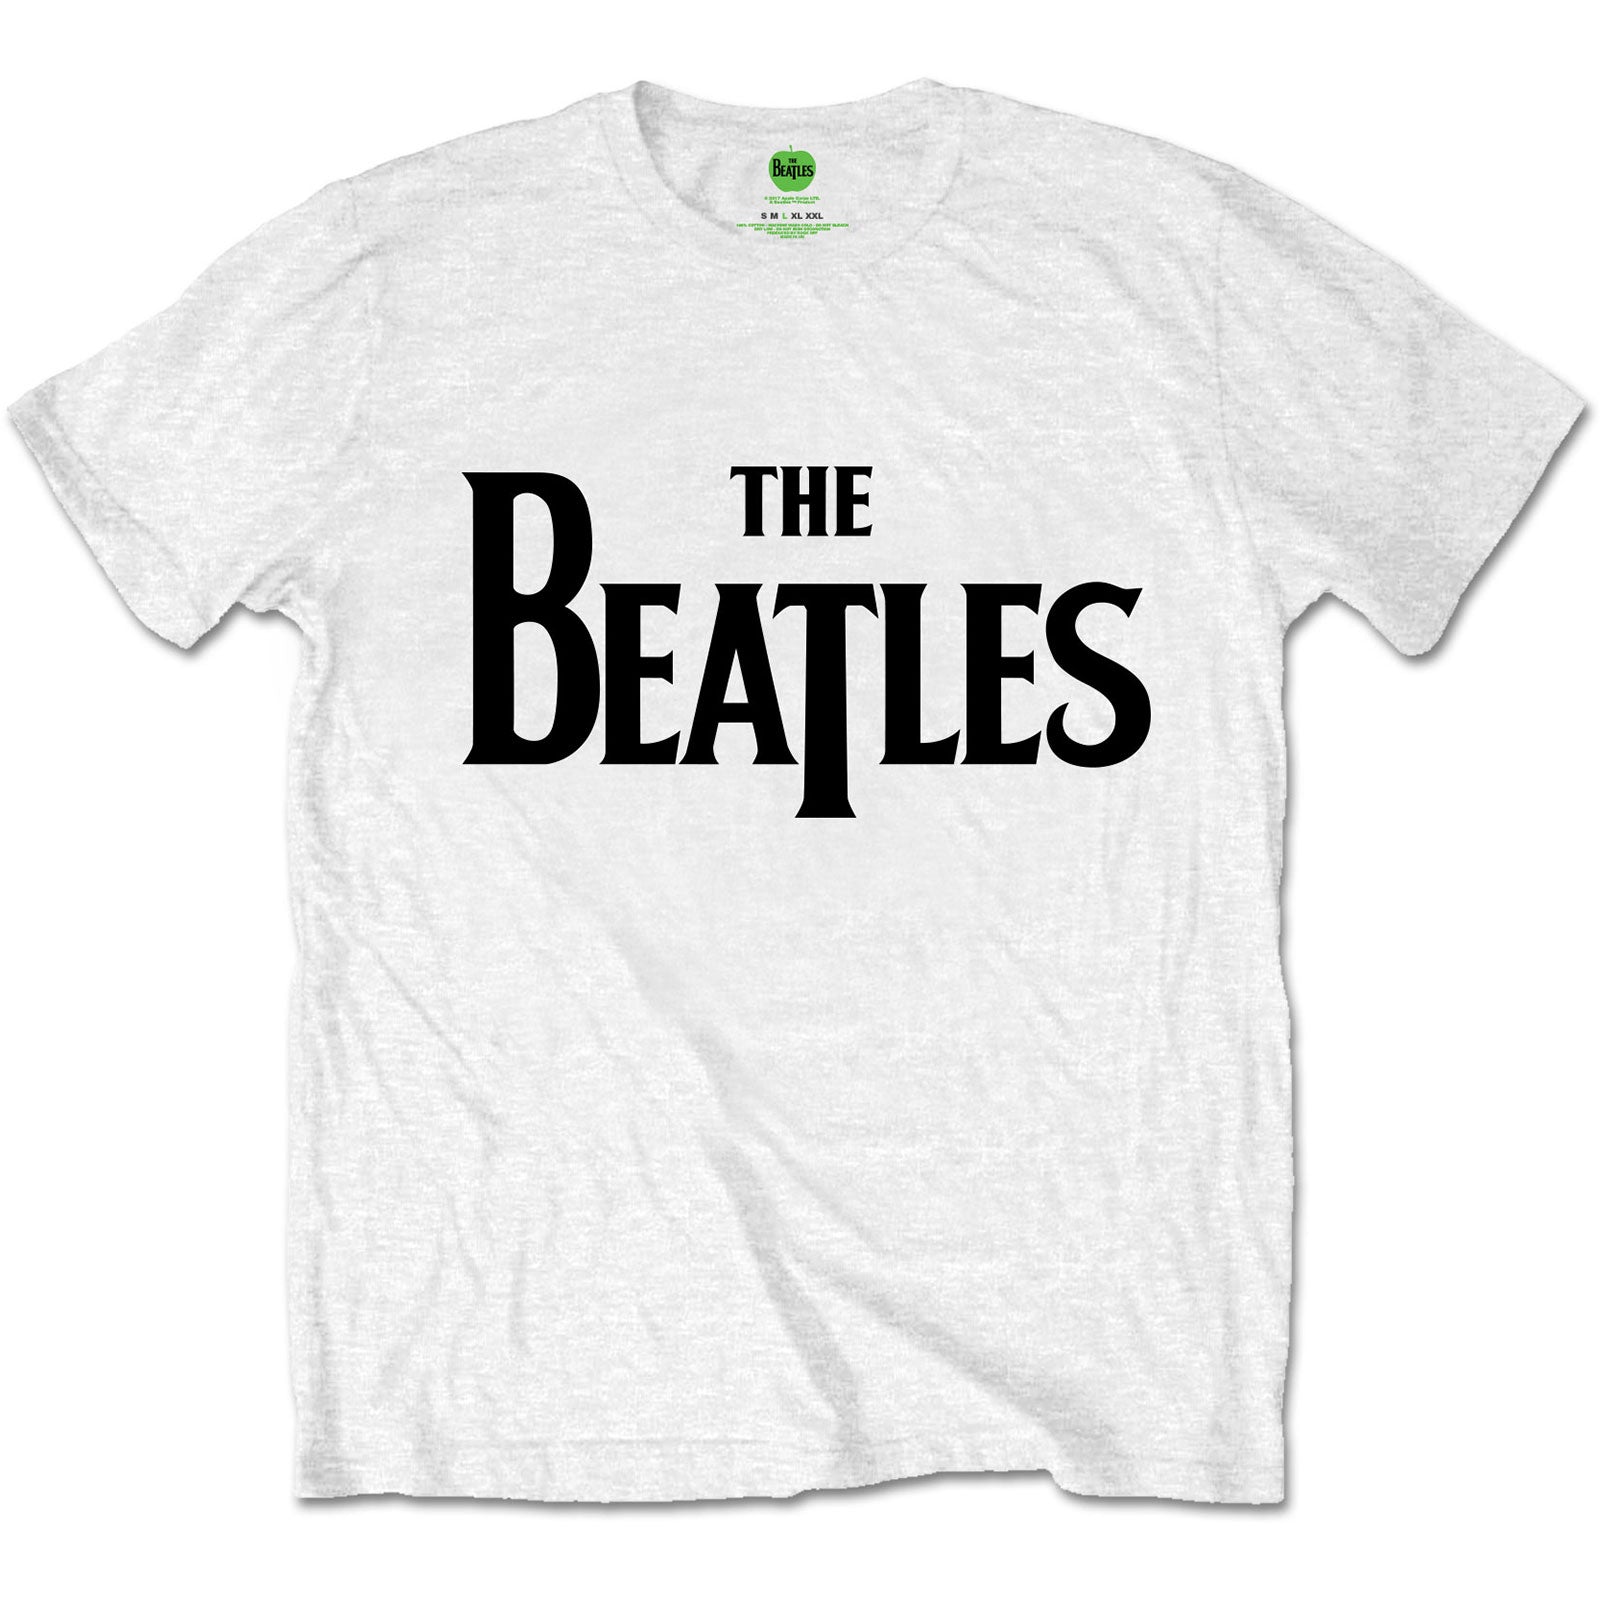 The Beatles "Drop T" Logo T-Shirt